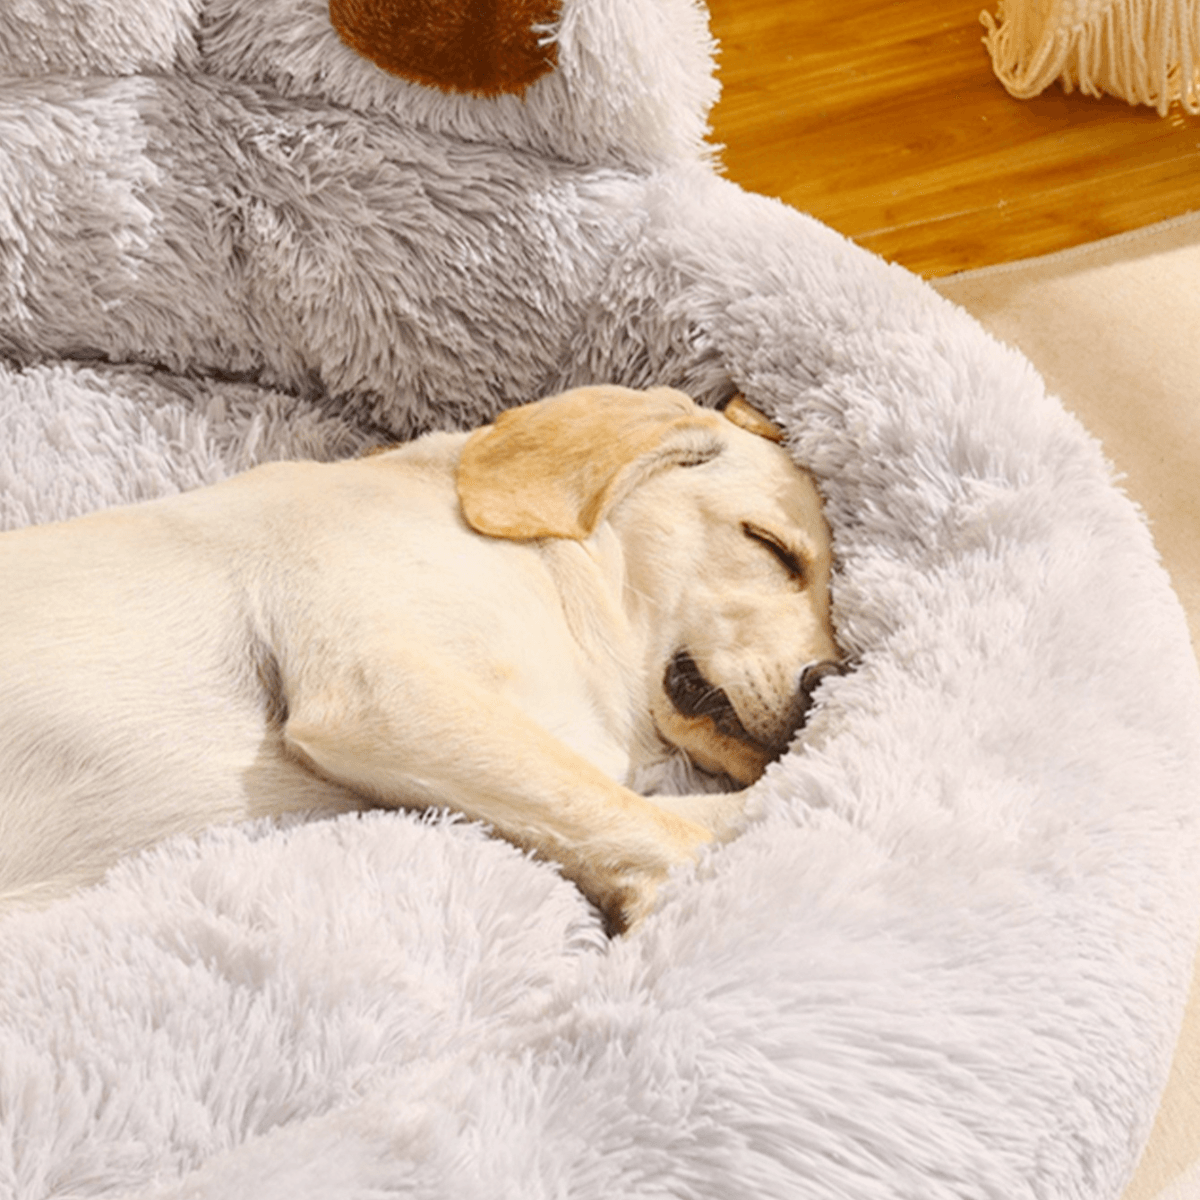 Fluffy Dog Bed - Kudos Gadgets